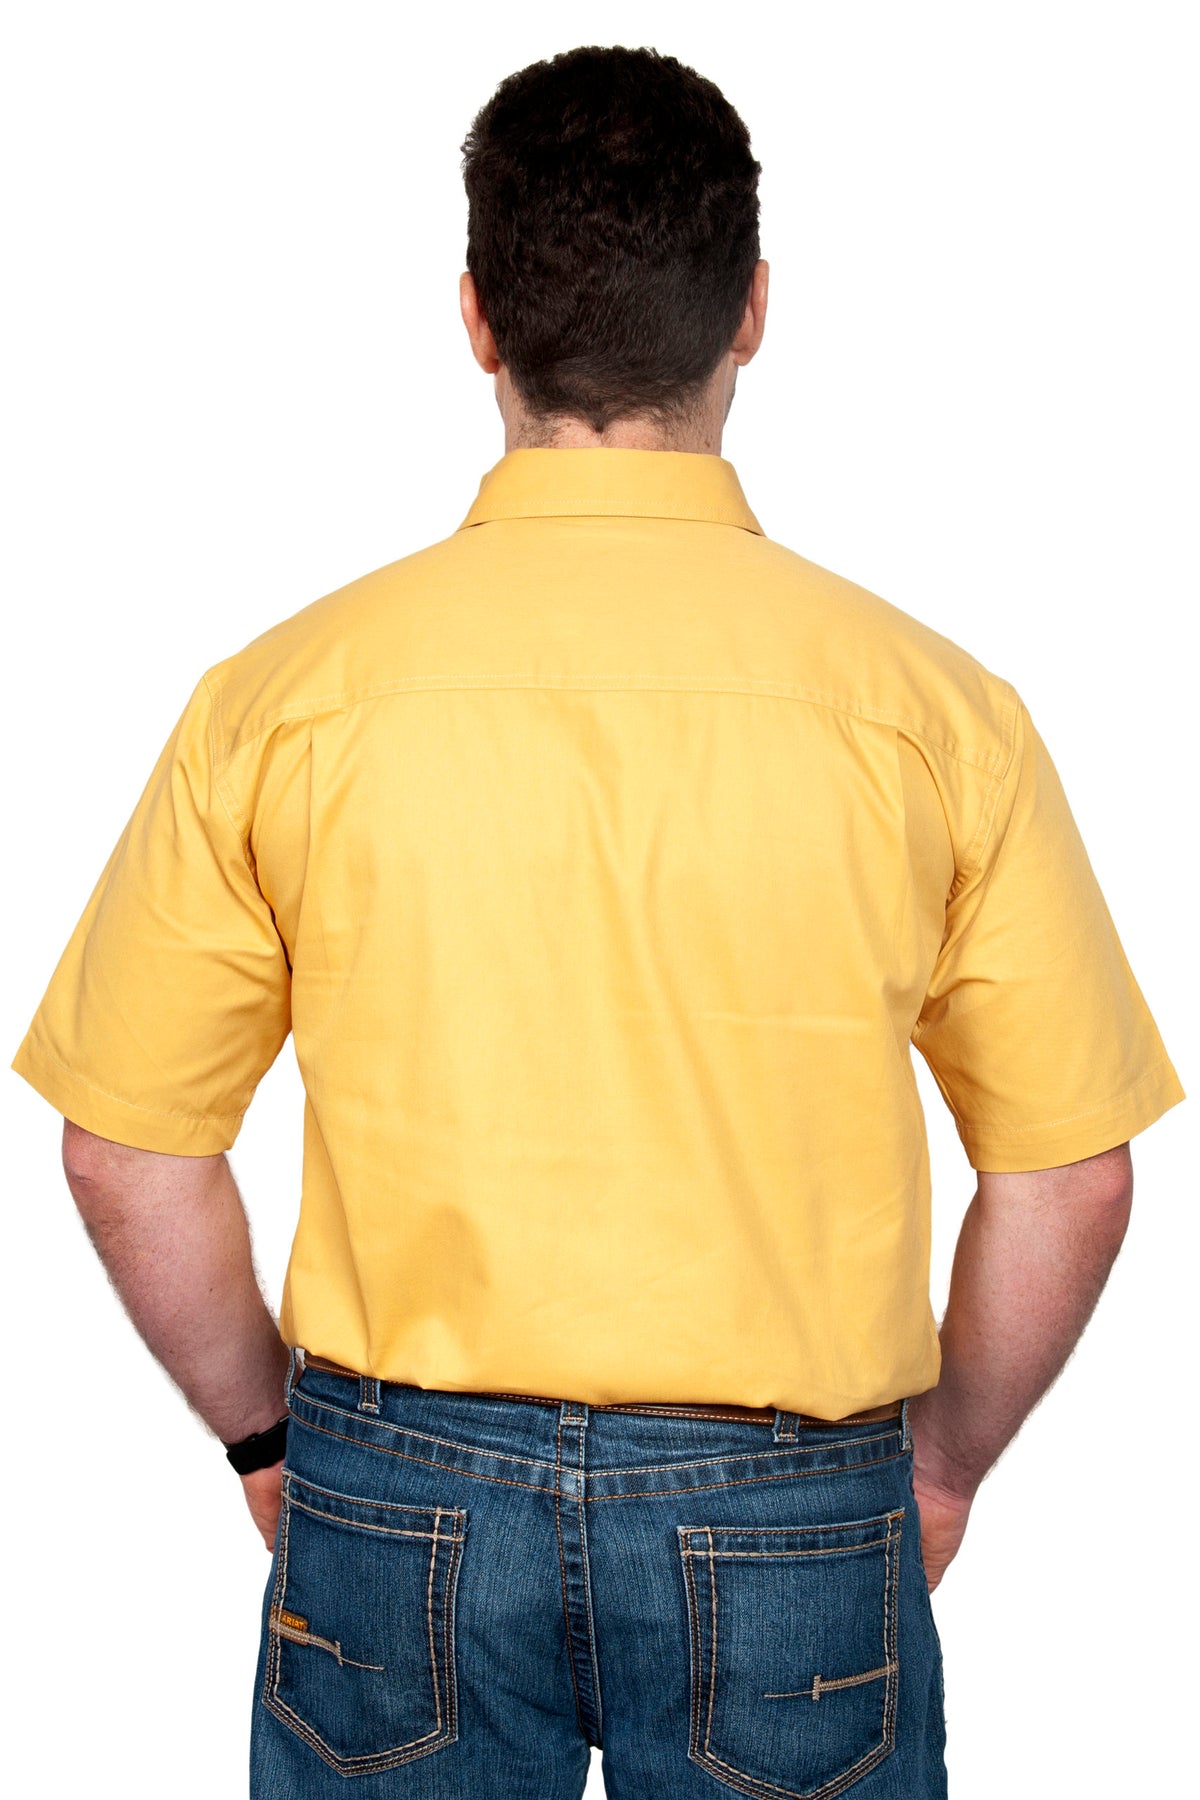 Just Country Mens Adam Short Sleeve Workshirt - Mustard